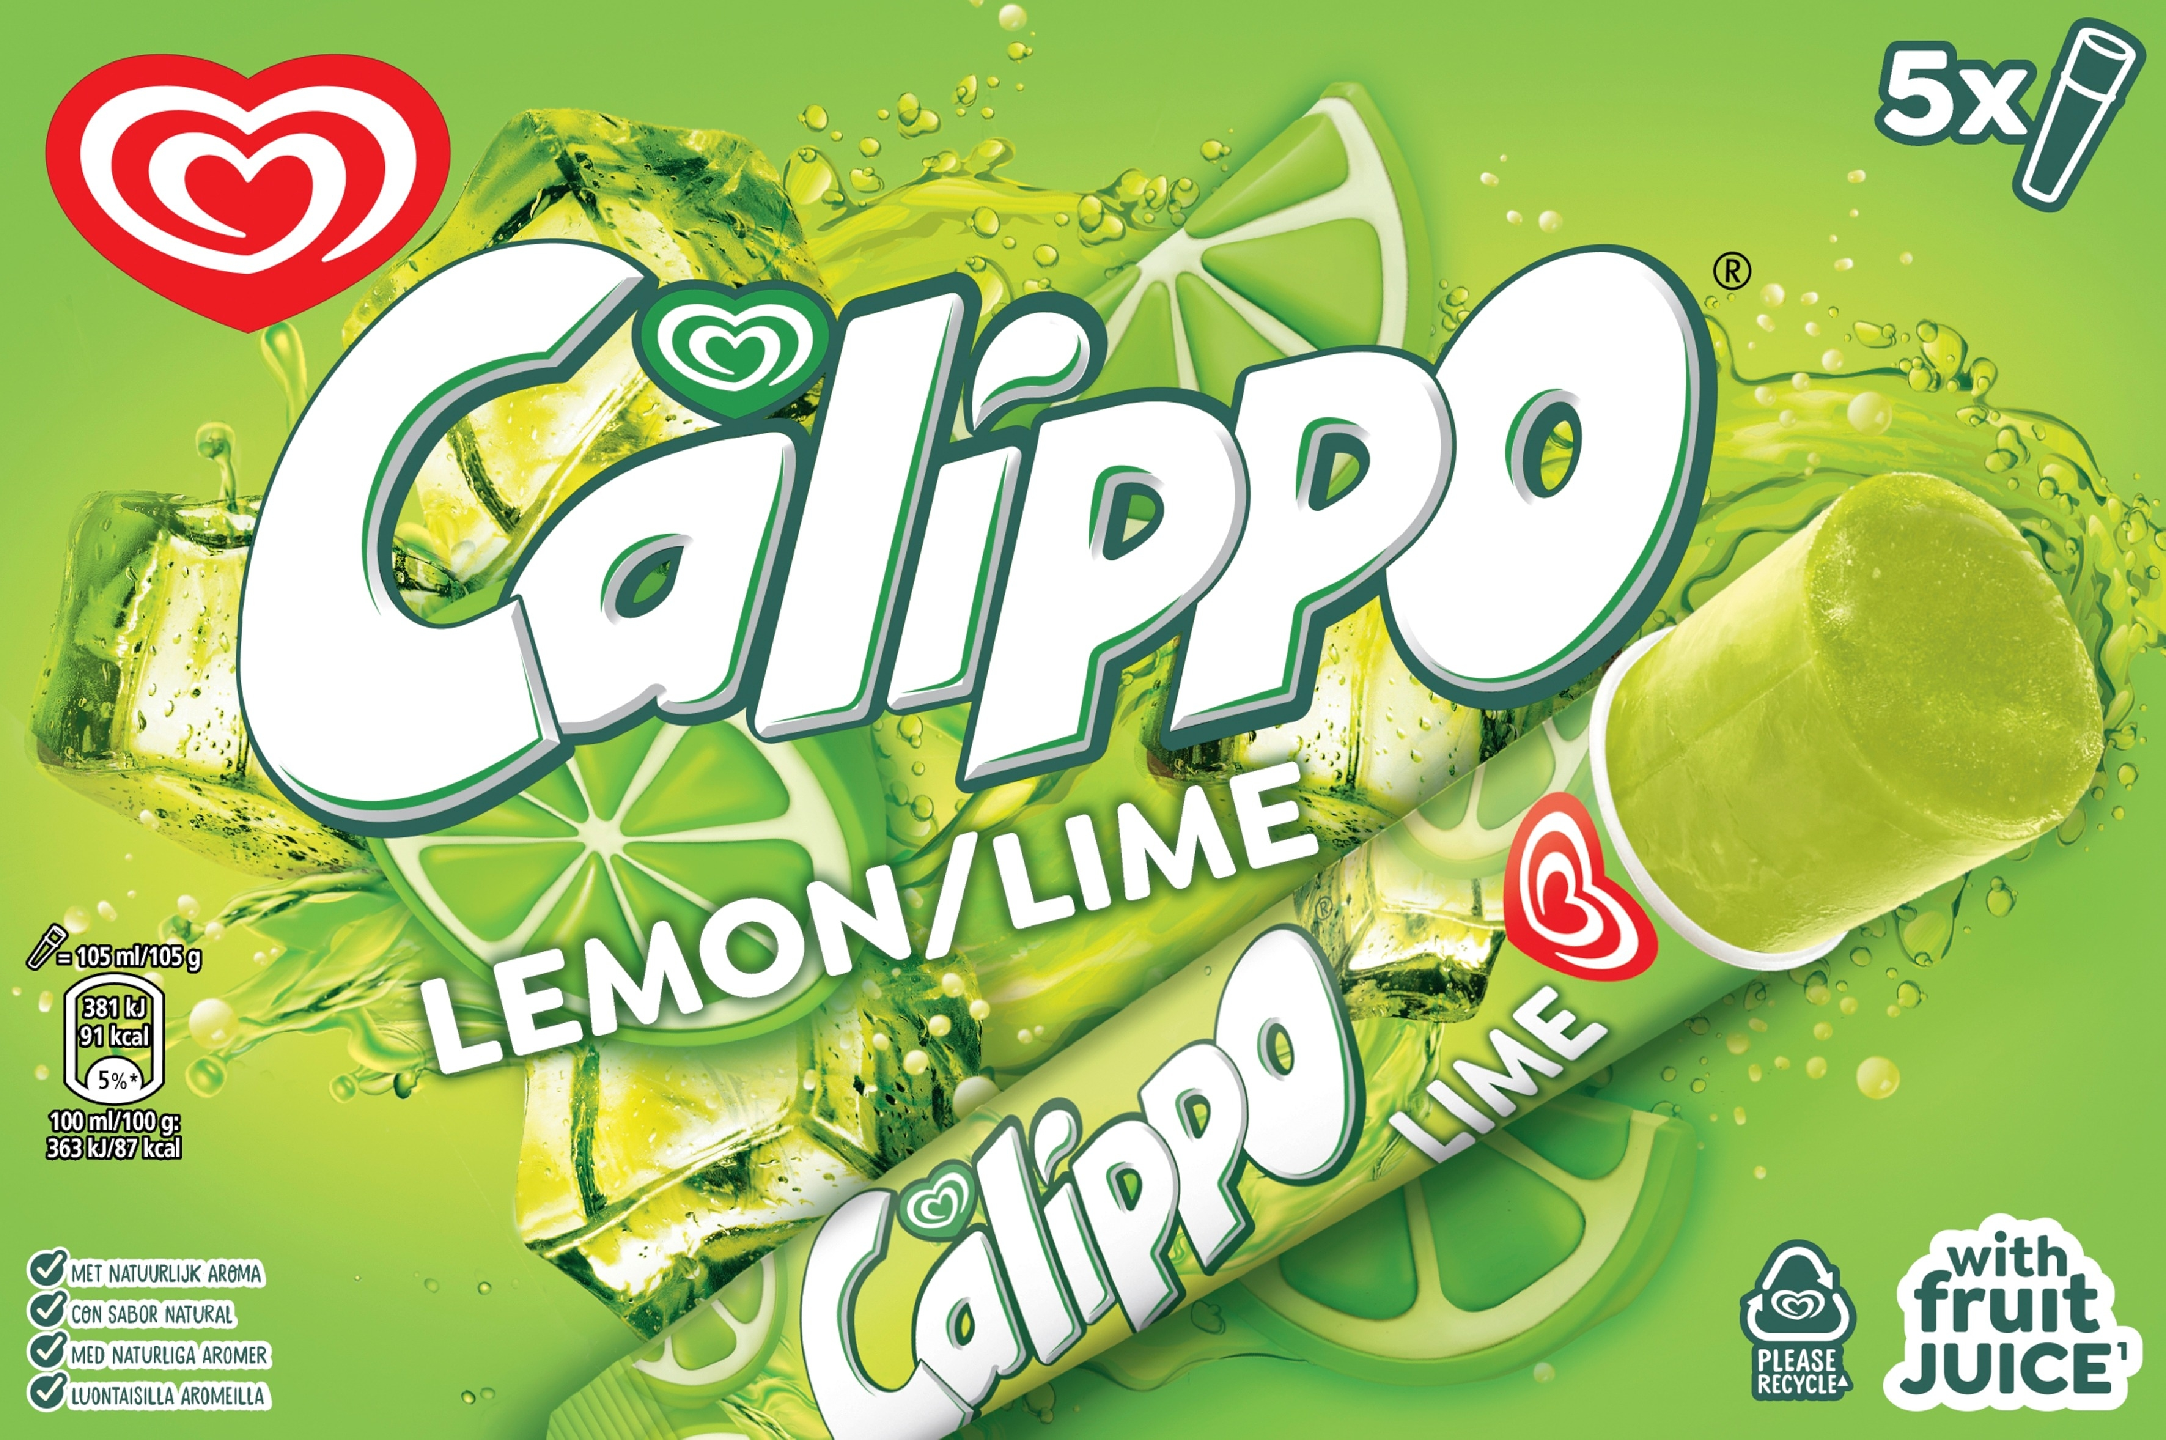 Calippo Lime limujää 5 kpl 525ml/643g